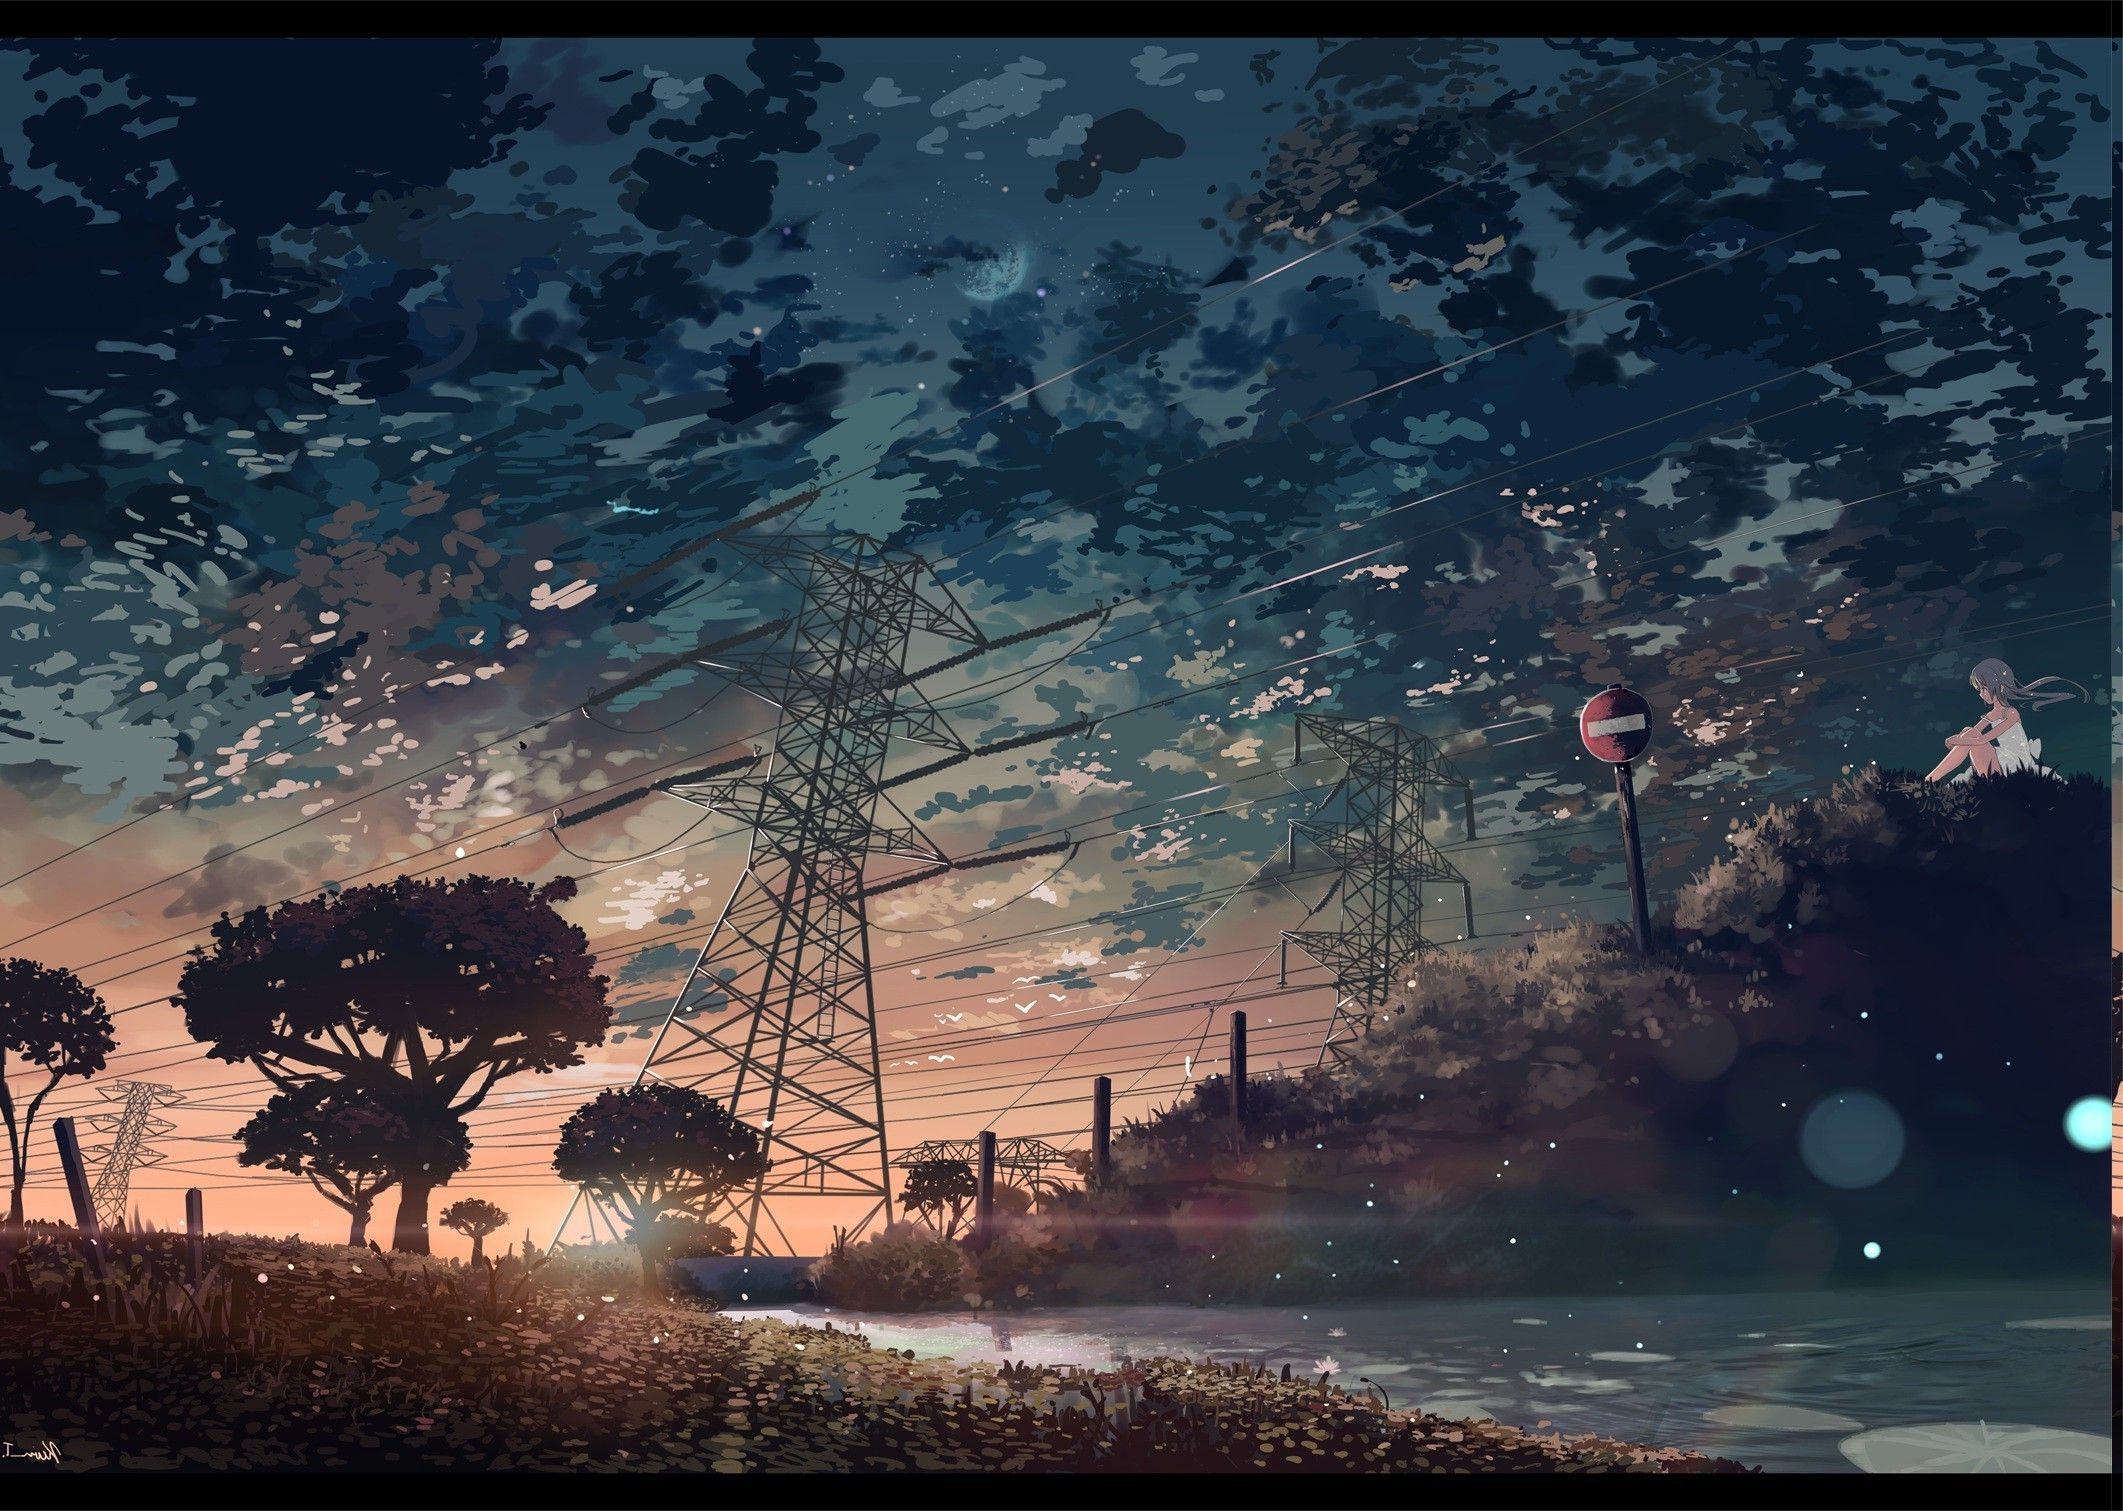 Anime Nature Wallpaper. Landscape wallpaper, Anime scenery wallpaper, Scenery wallpaper